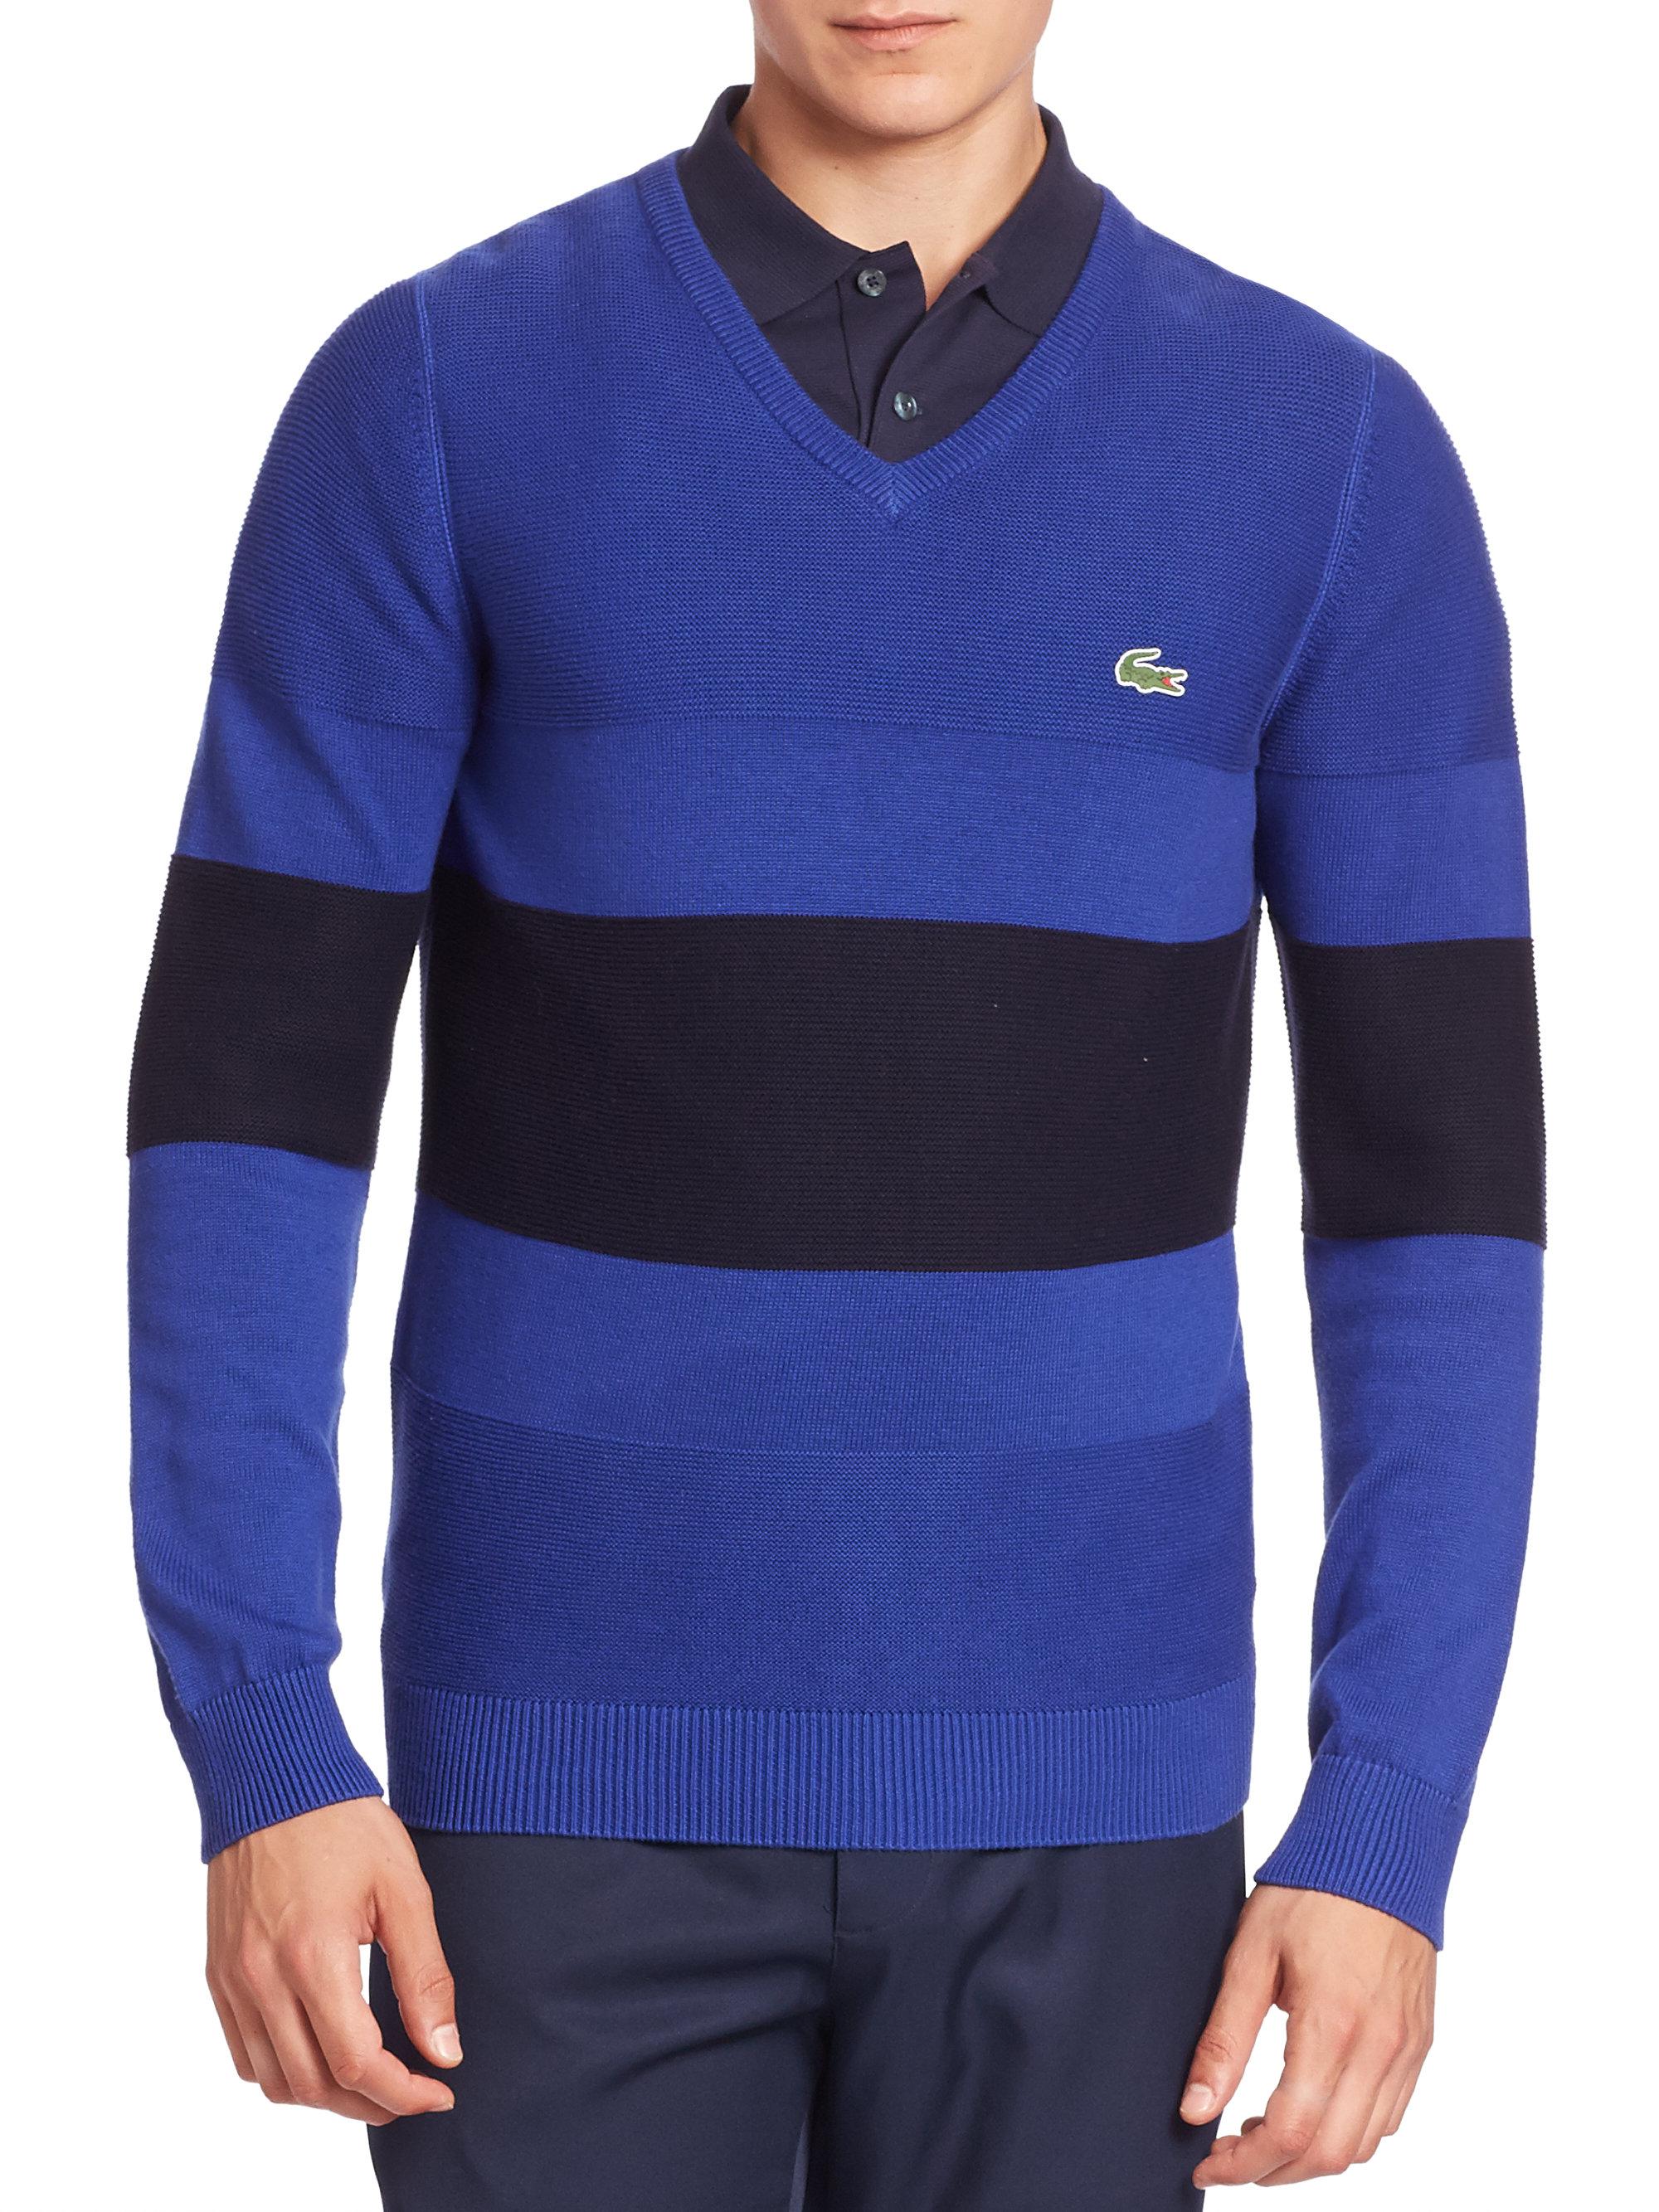 Lyst - Lacoste Striped Colorblock Sweater in Blue for Men